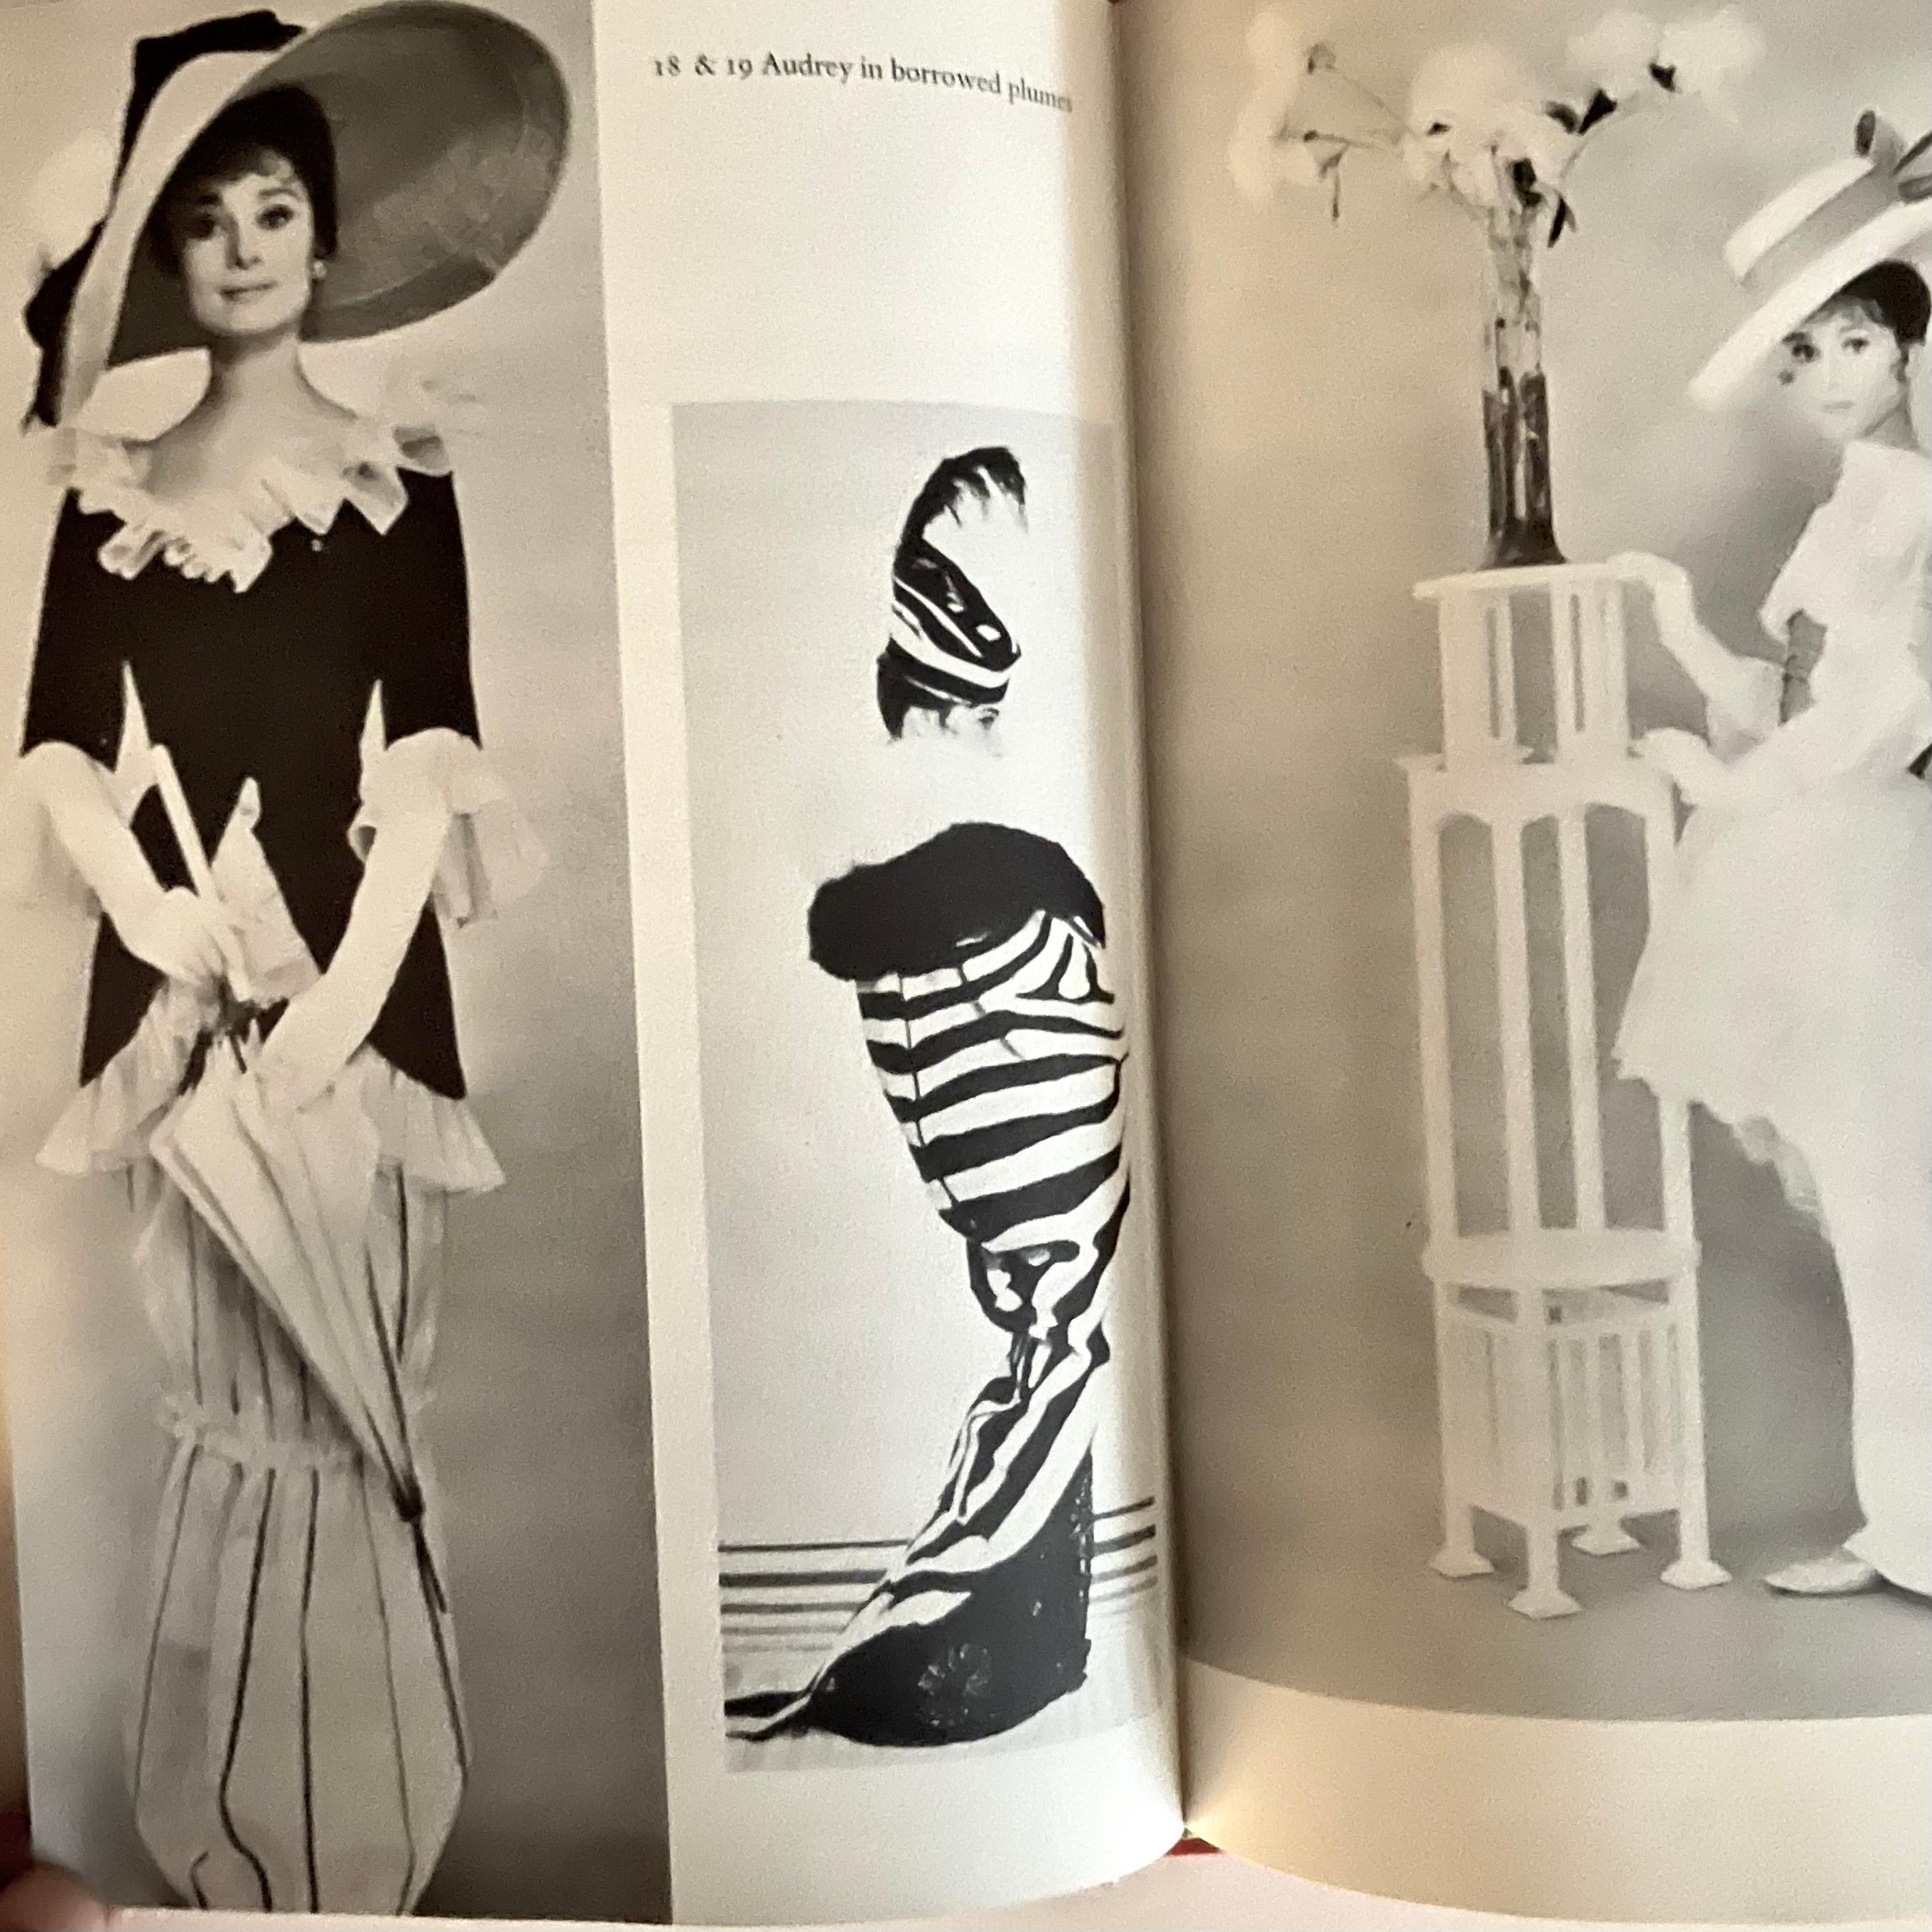 Paper Cecil Beaton's Fair Lady - Cecil Beaton - 1st US edition, 1964